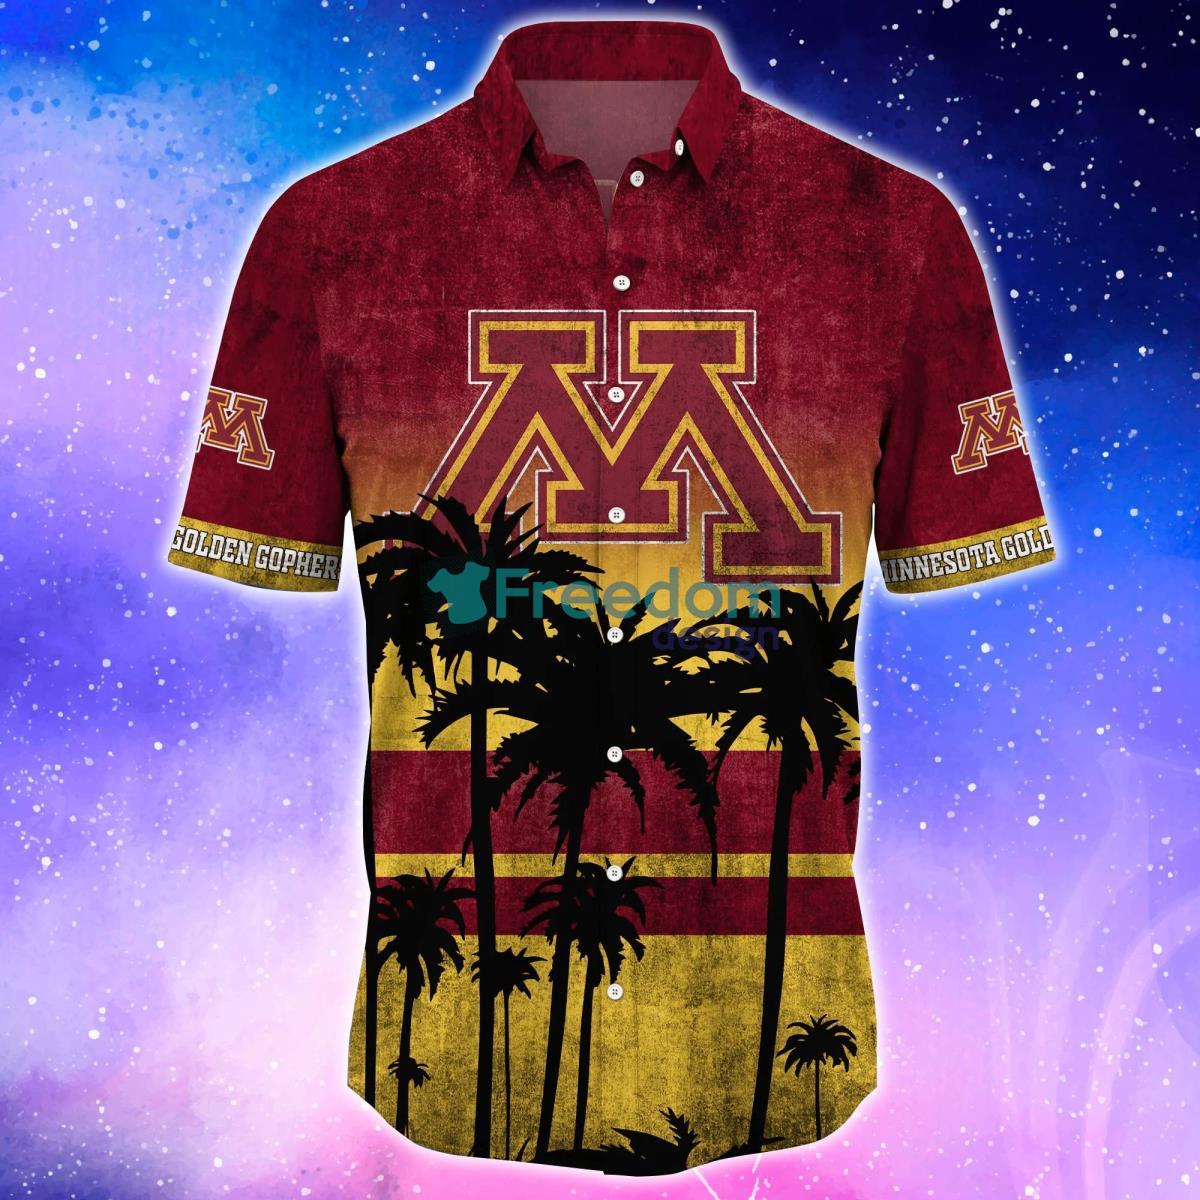 LIMITED] Minnesota Wild NHL-Summer Hawaiian Shirt And Shorts, For Fans This  Season